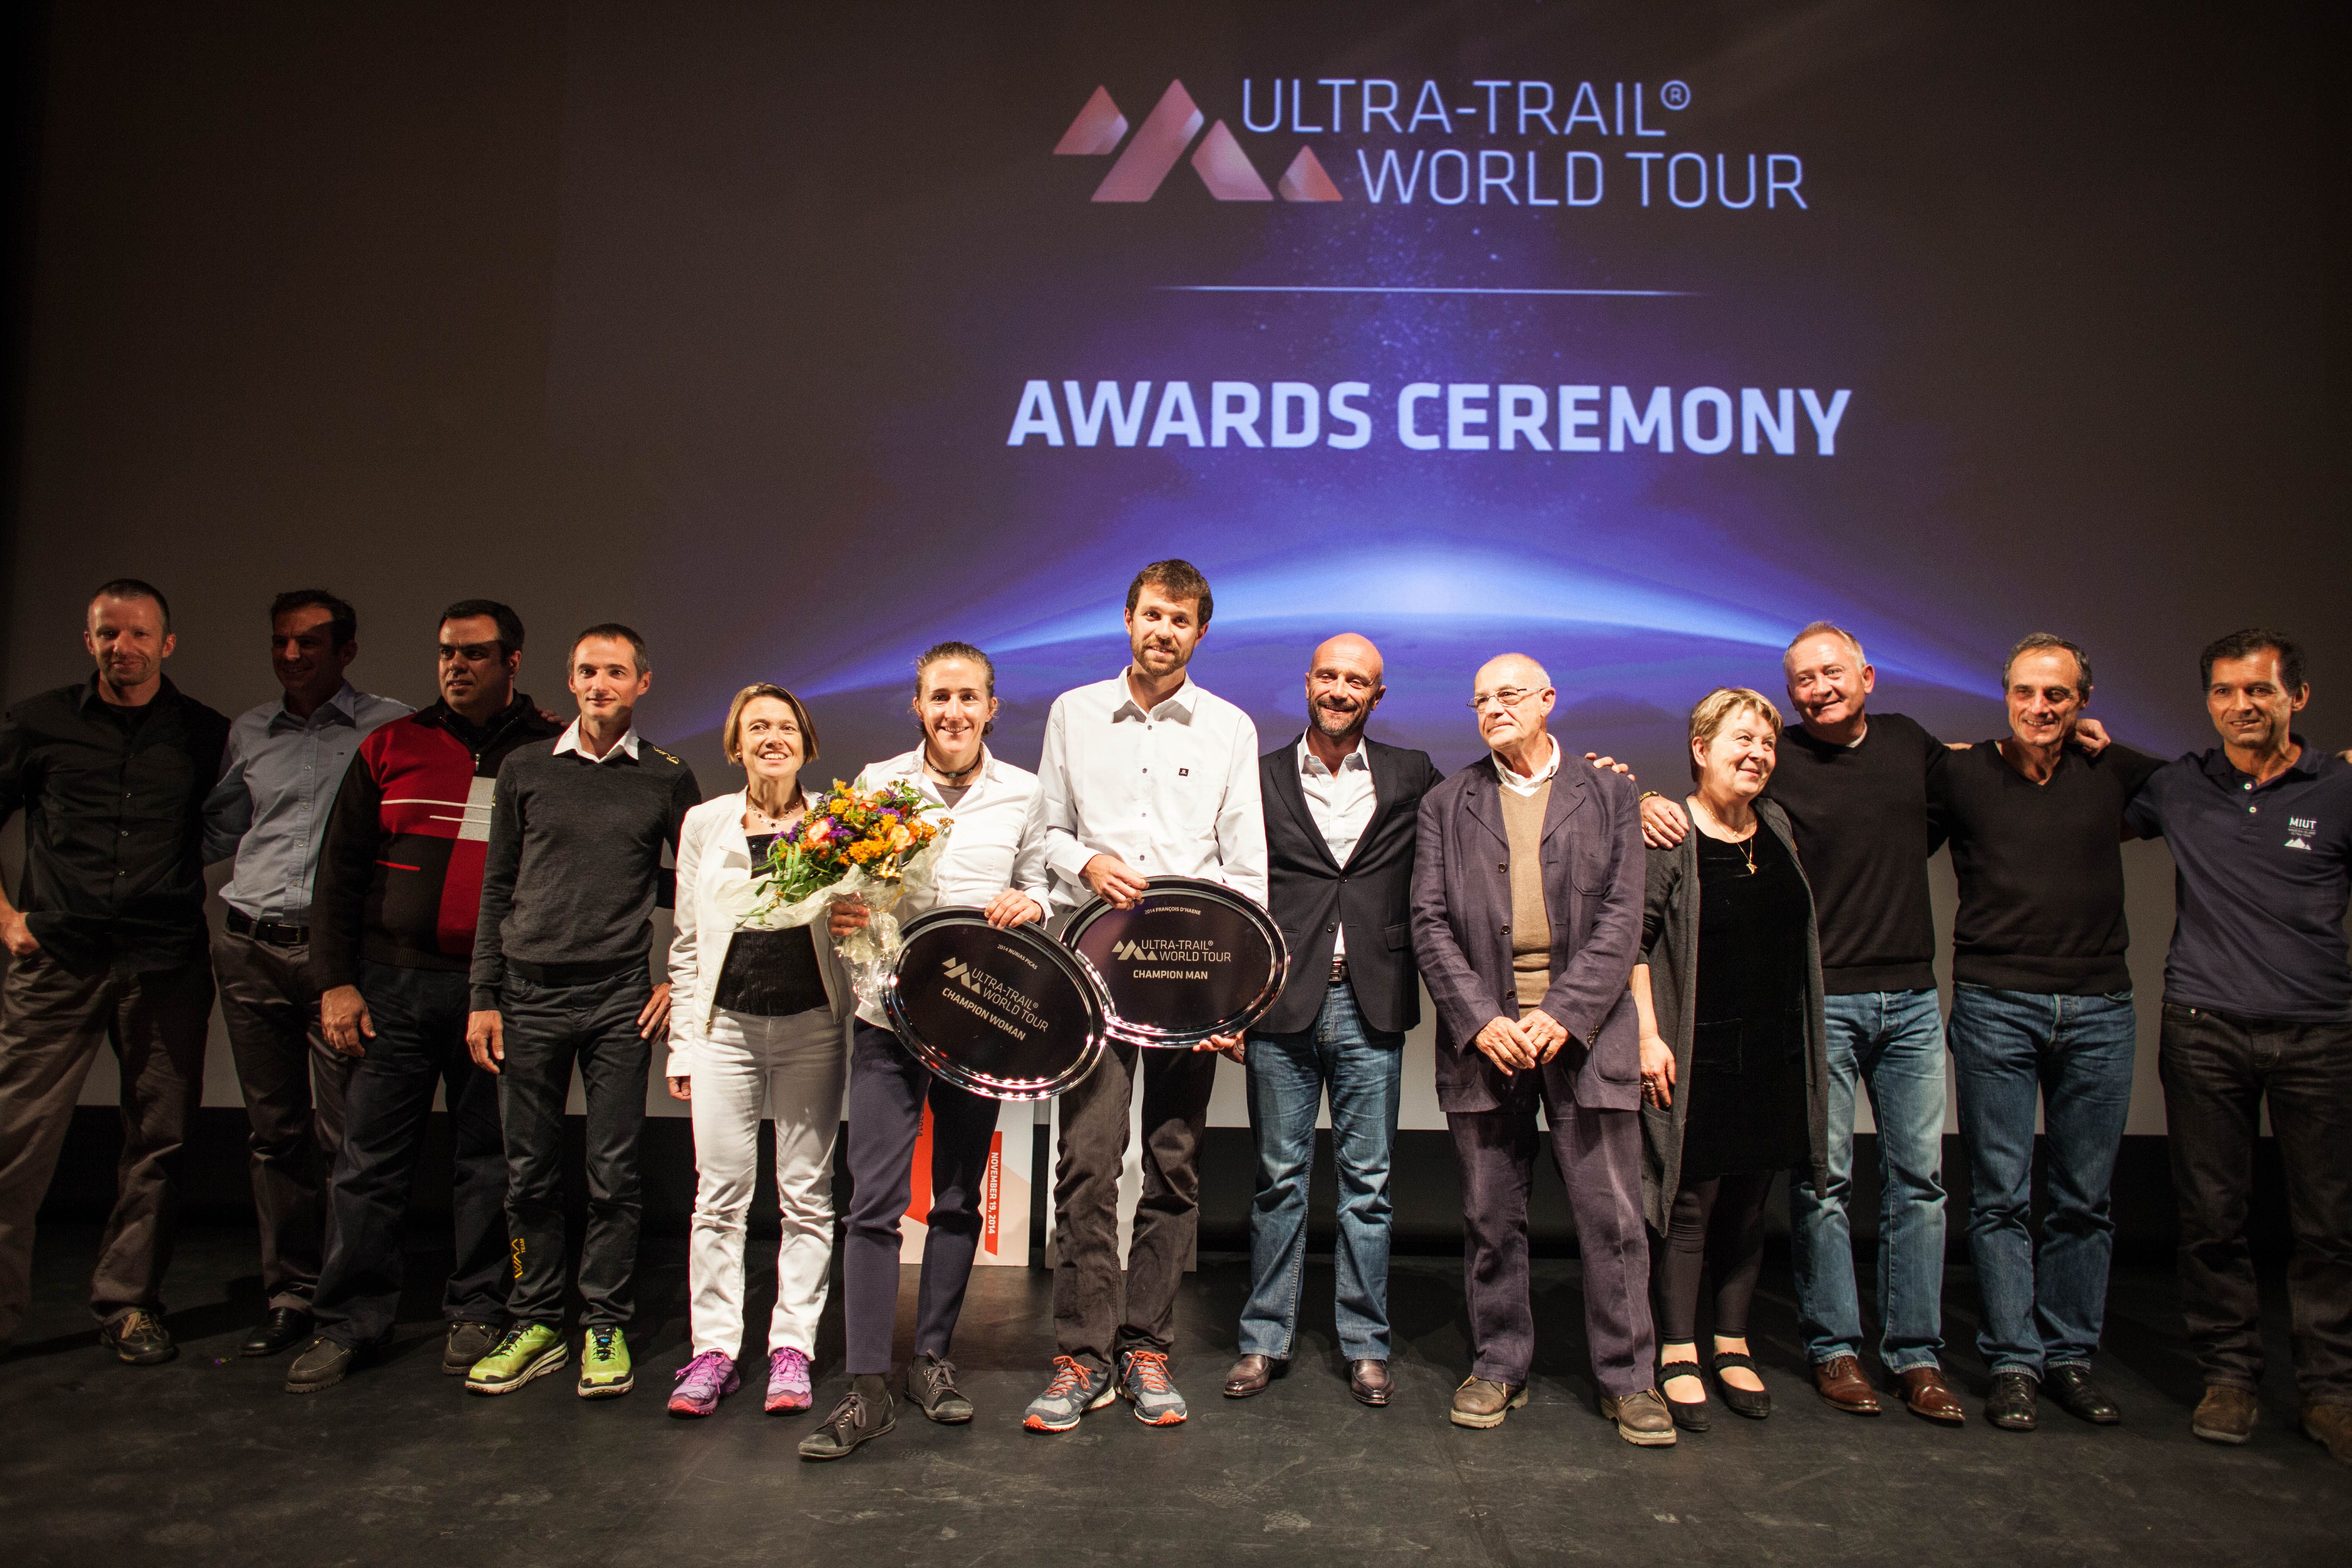  Ultra-Trail® World Tour 2014 award ceremony